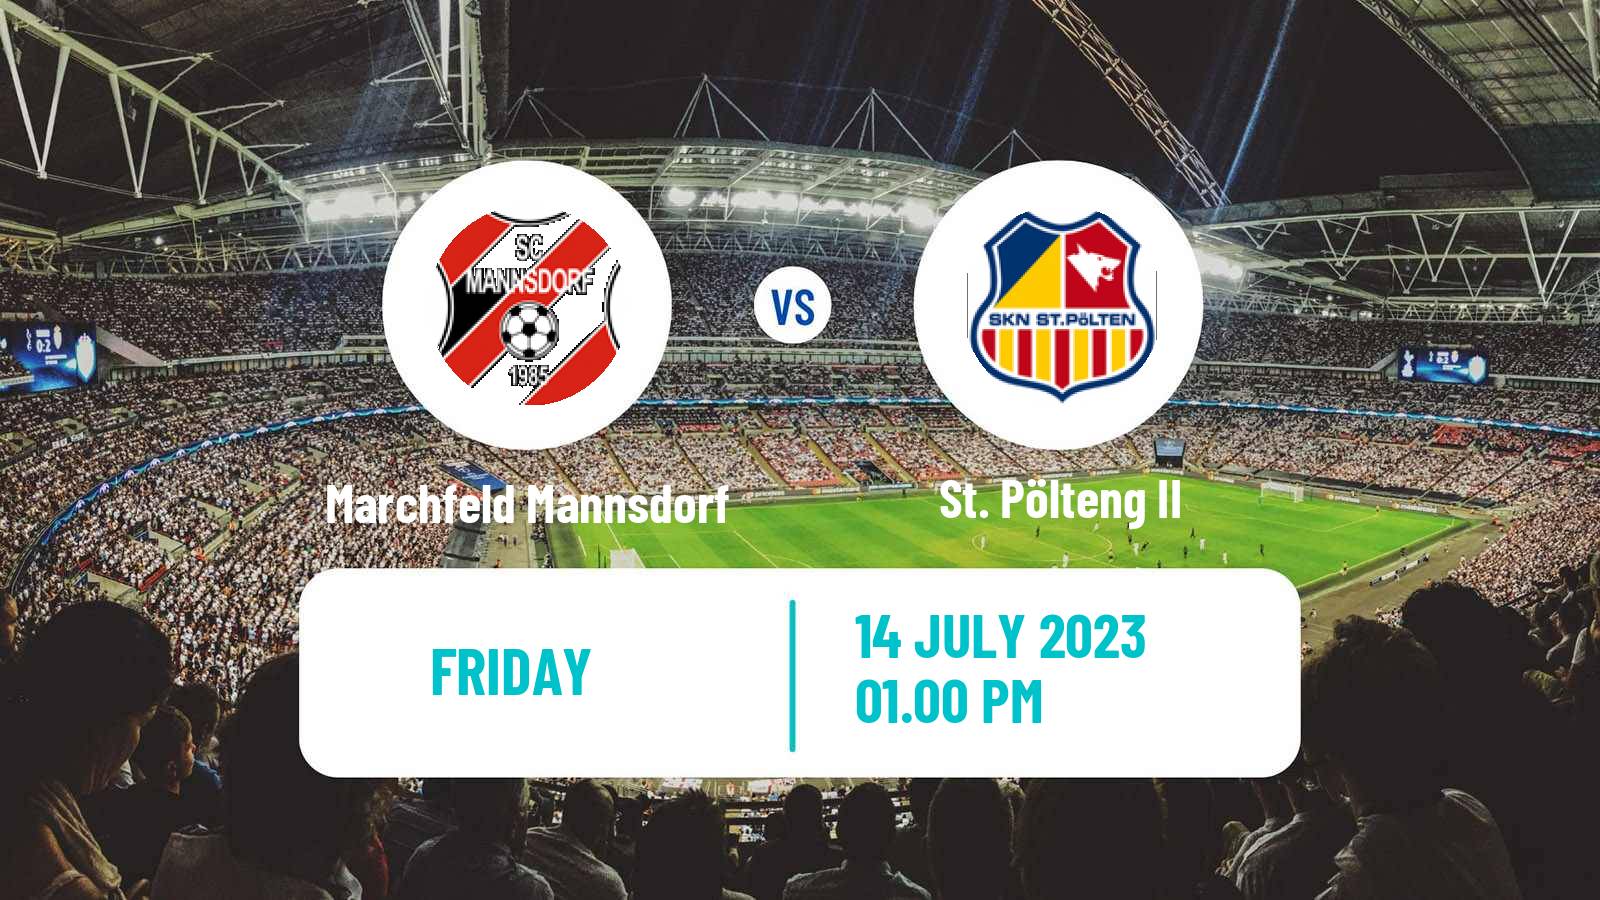 Soccer Club Friendly Marchfeld Mannsdorf - St. Pölteng II